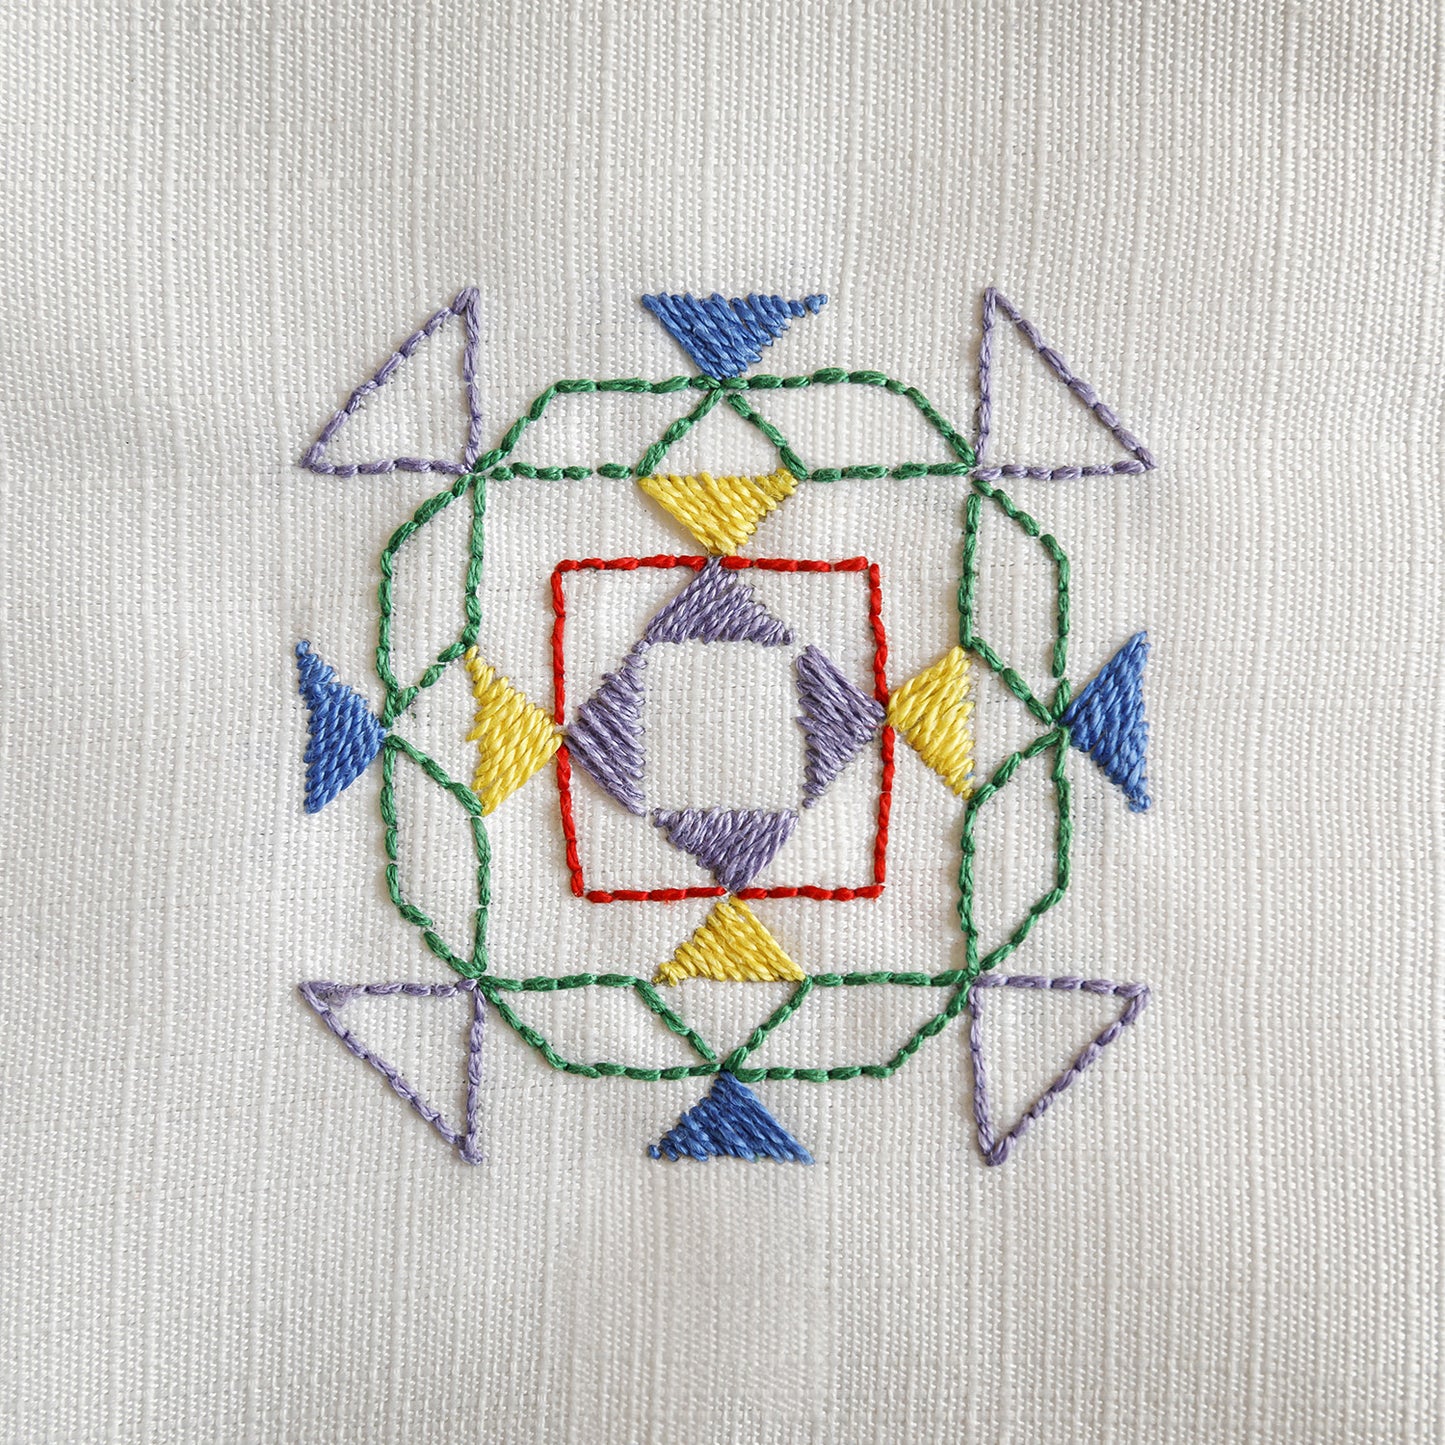 PREORDER - Learn Embroidery Stitch by Stitch with Missouri Star Alternative View #17